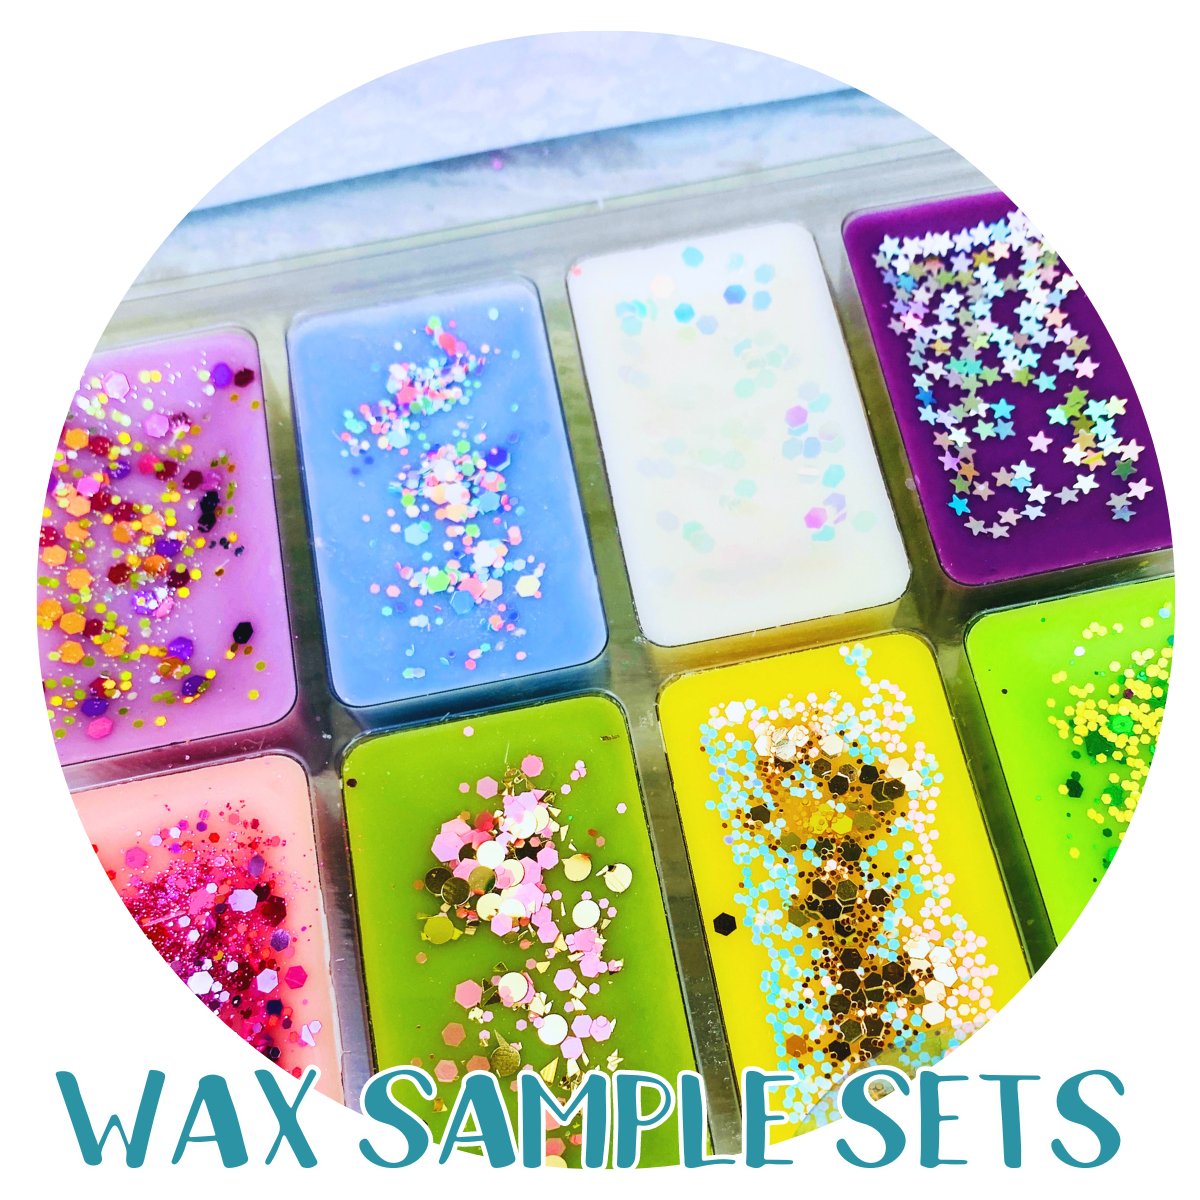 Wax Sample Sets